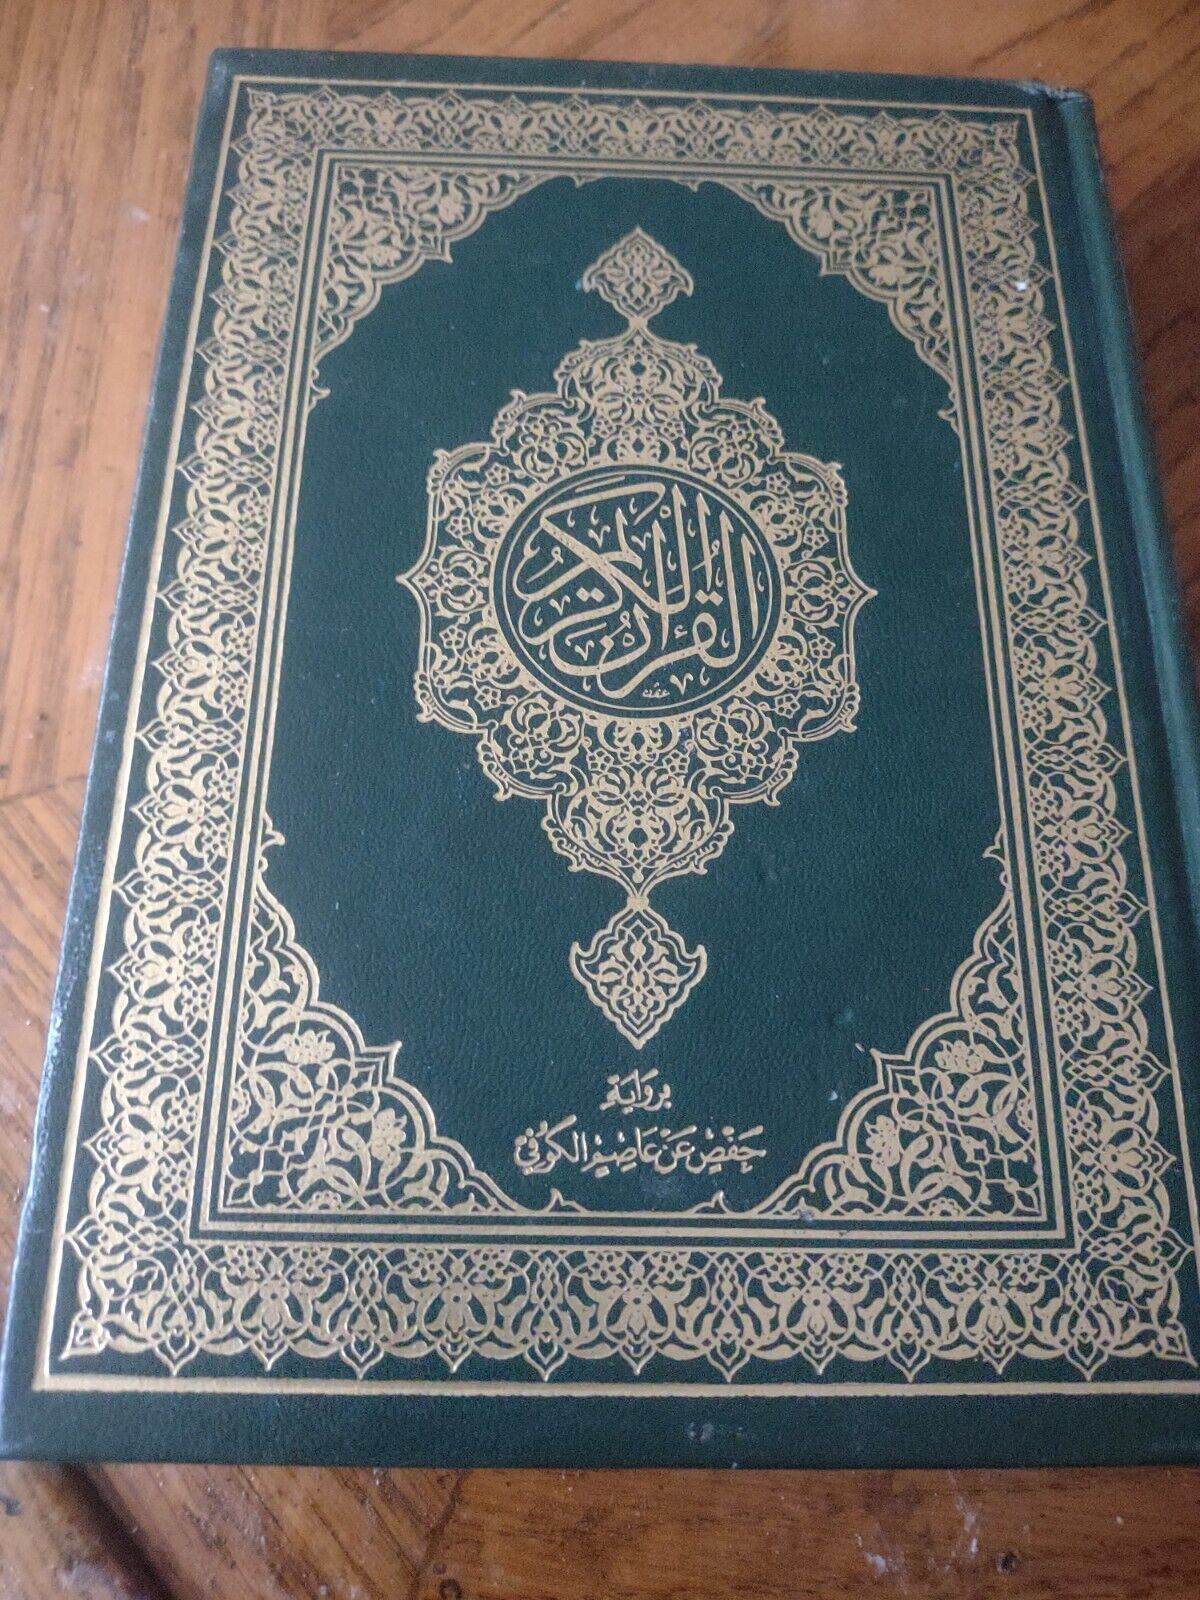 Holy Quran Arabic